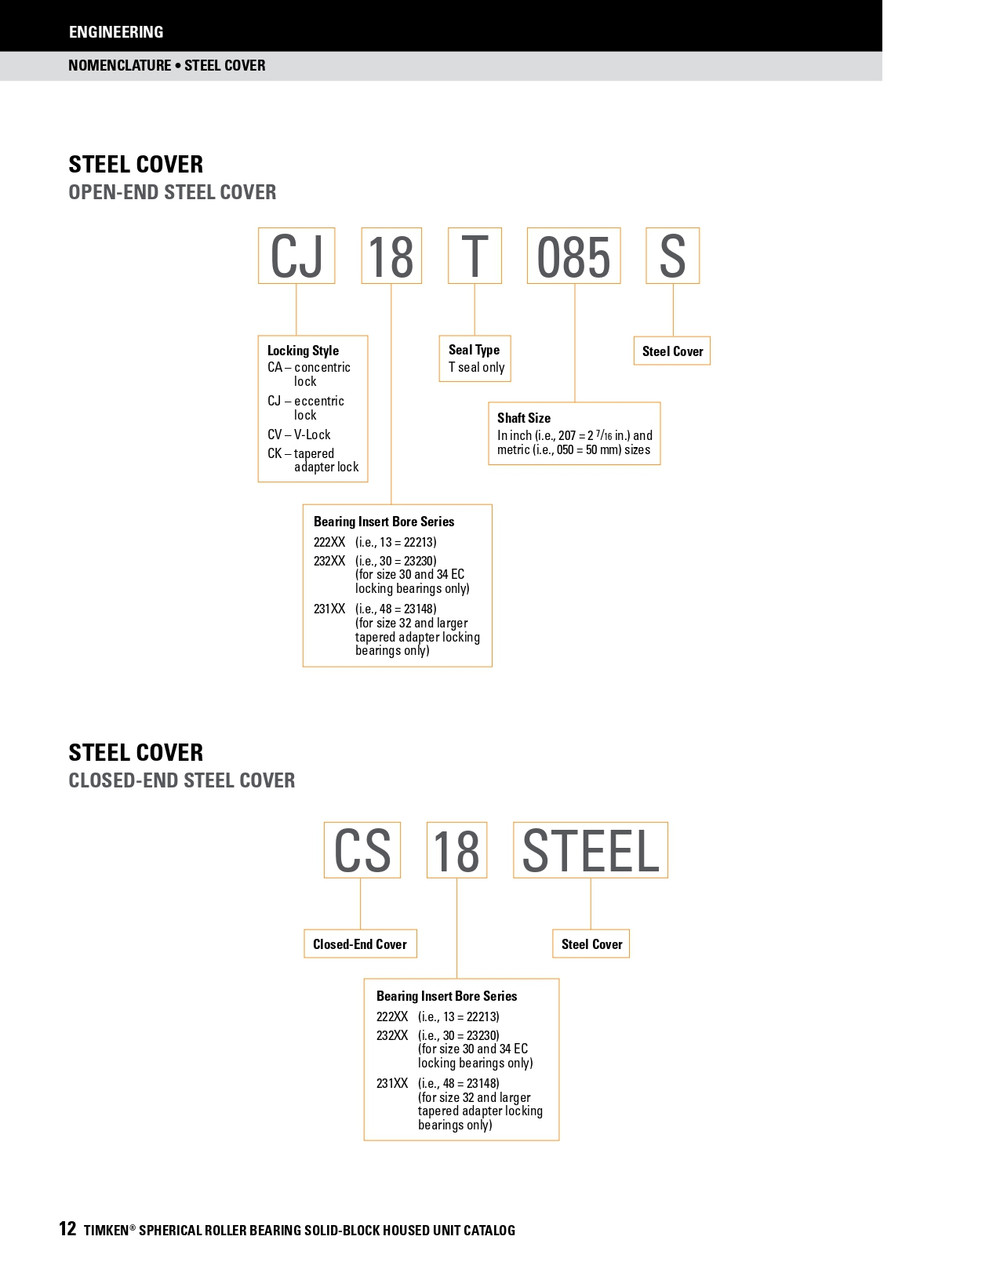 4-7/16" Timken SRB Steel Open End Cover w/Teflon Seal - QA Concentric Lock Type  CA22T407S